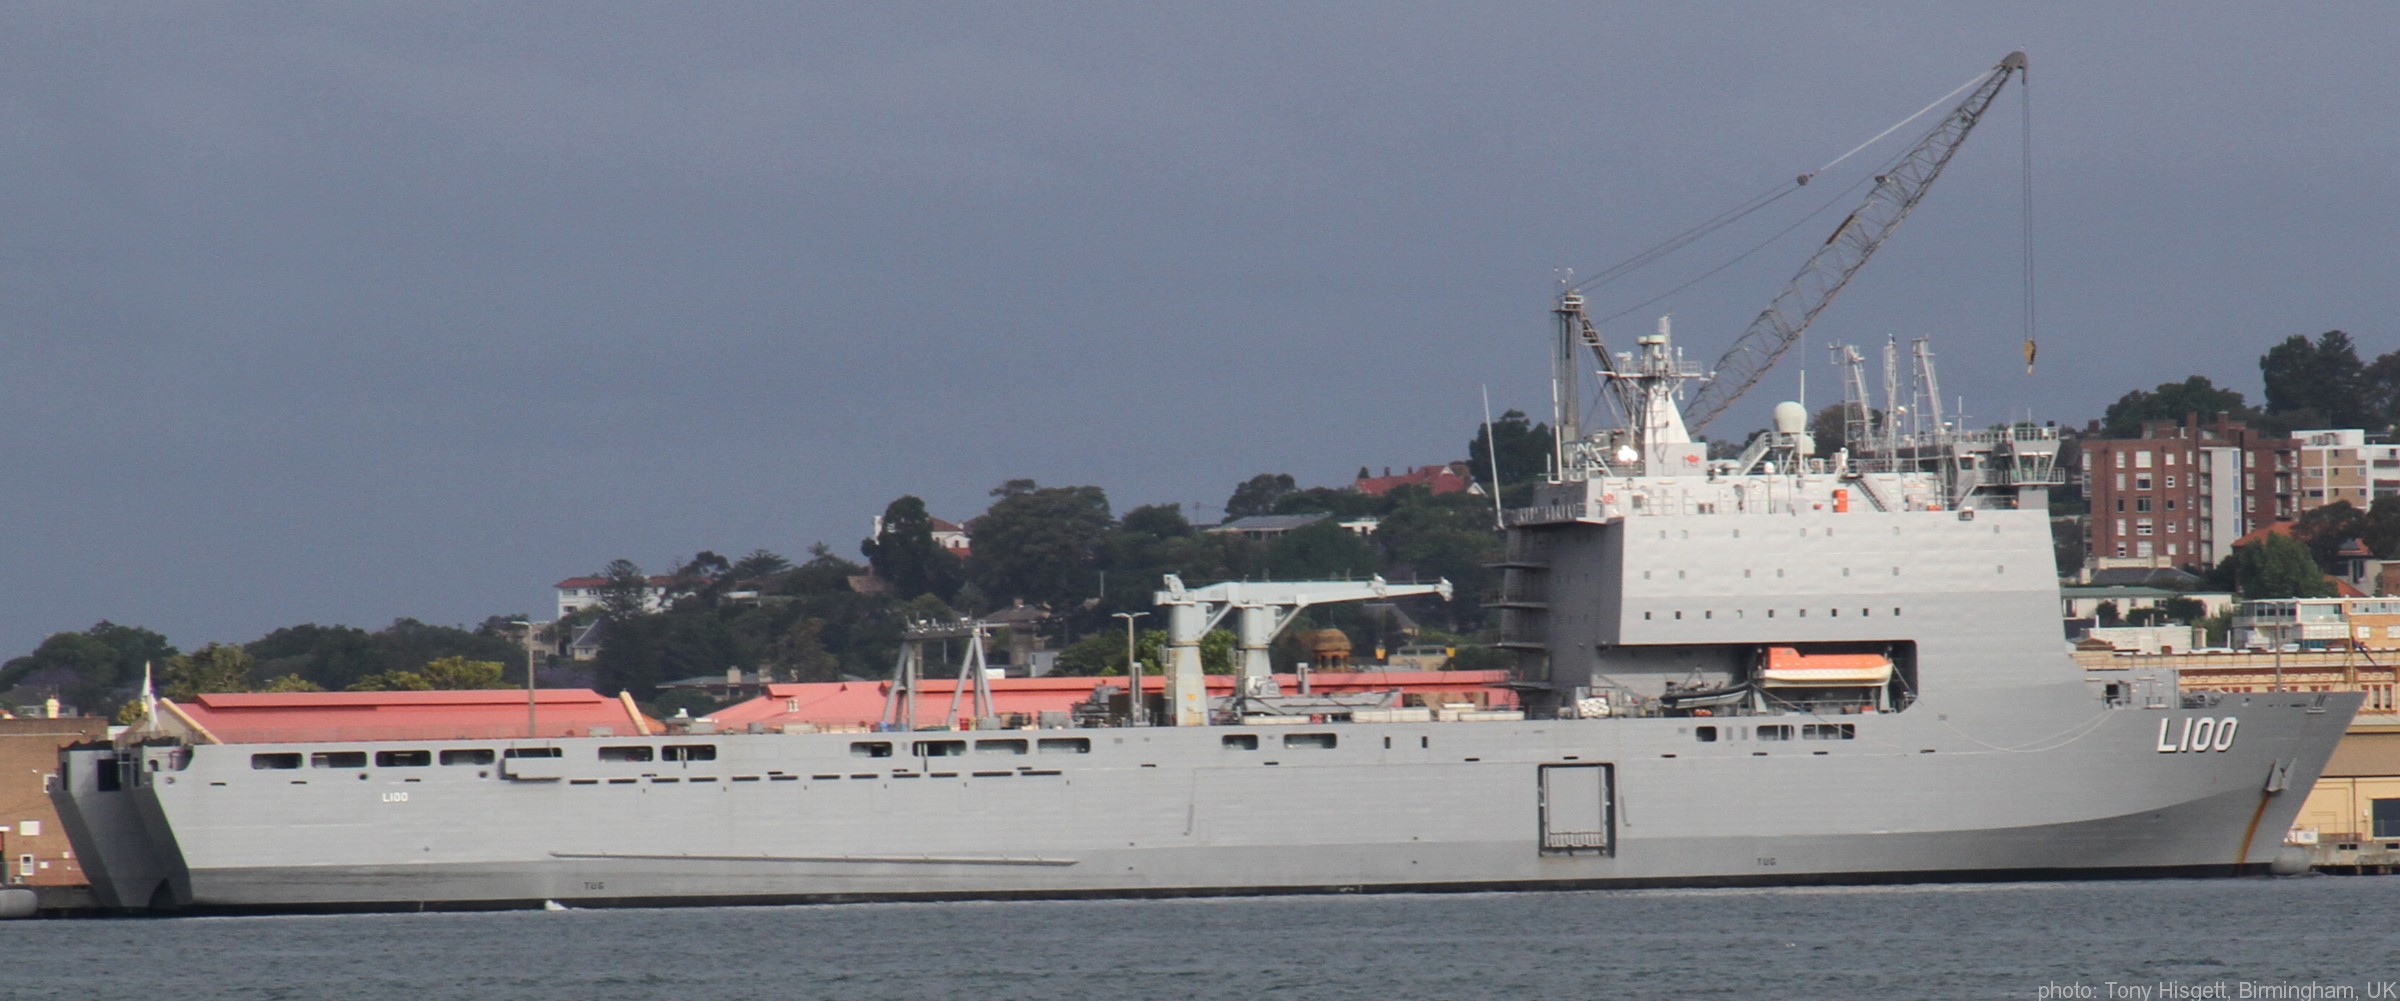 hmas choules l-100 bay class amphibious landing ship dock lsd royal australian navy ex rfa largs bay l-3006